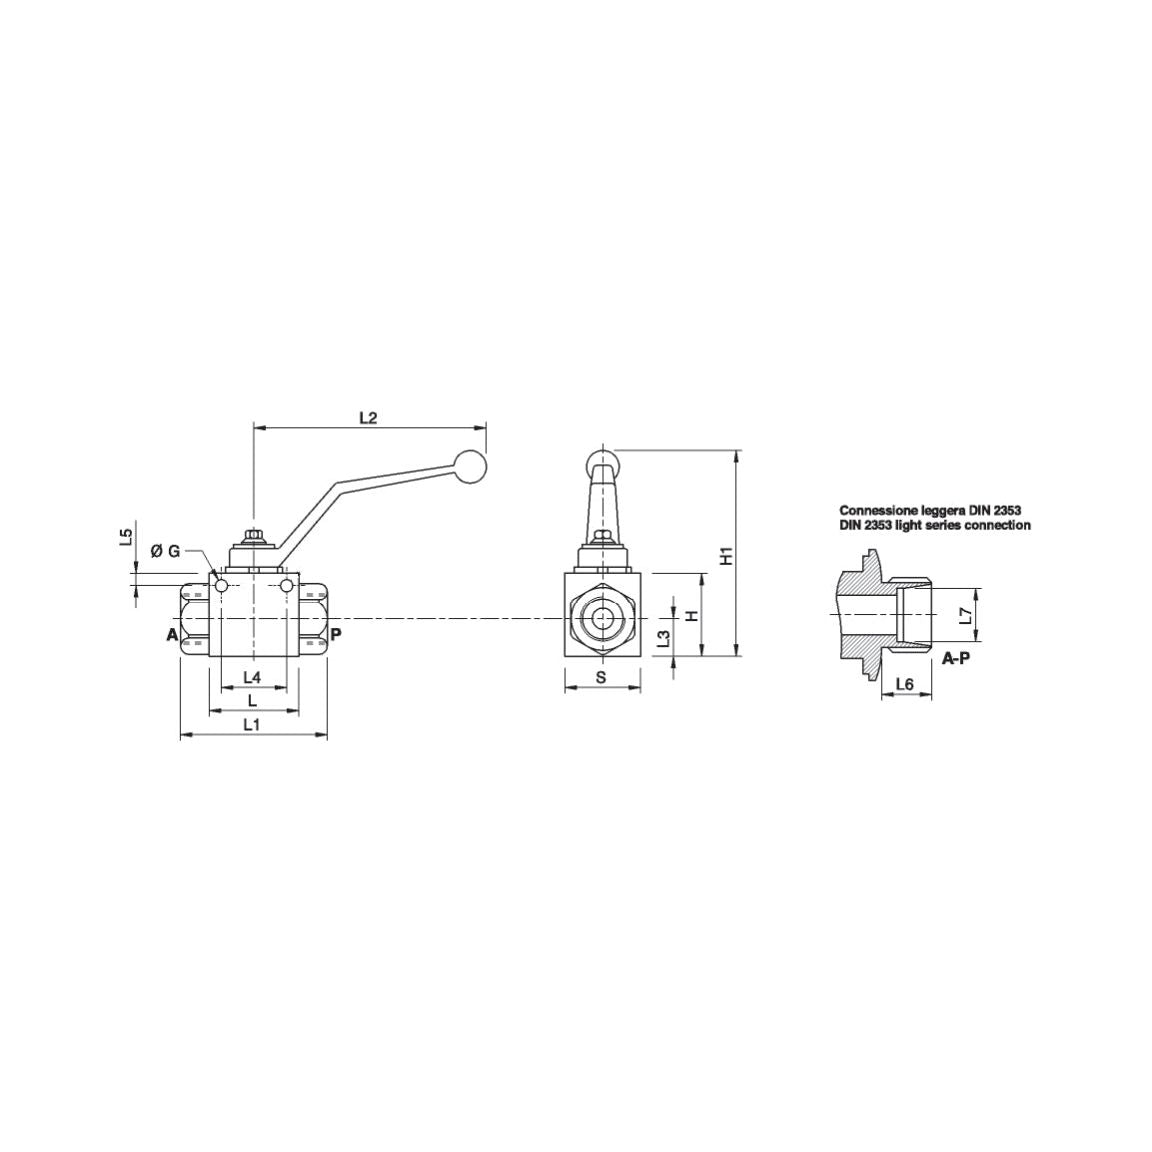 Hydraulic 2-Way Shut-off Ball valve M22 x 1.5
 - S.30221 - Farming Parts